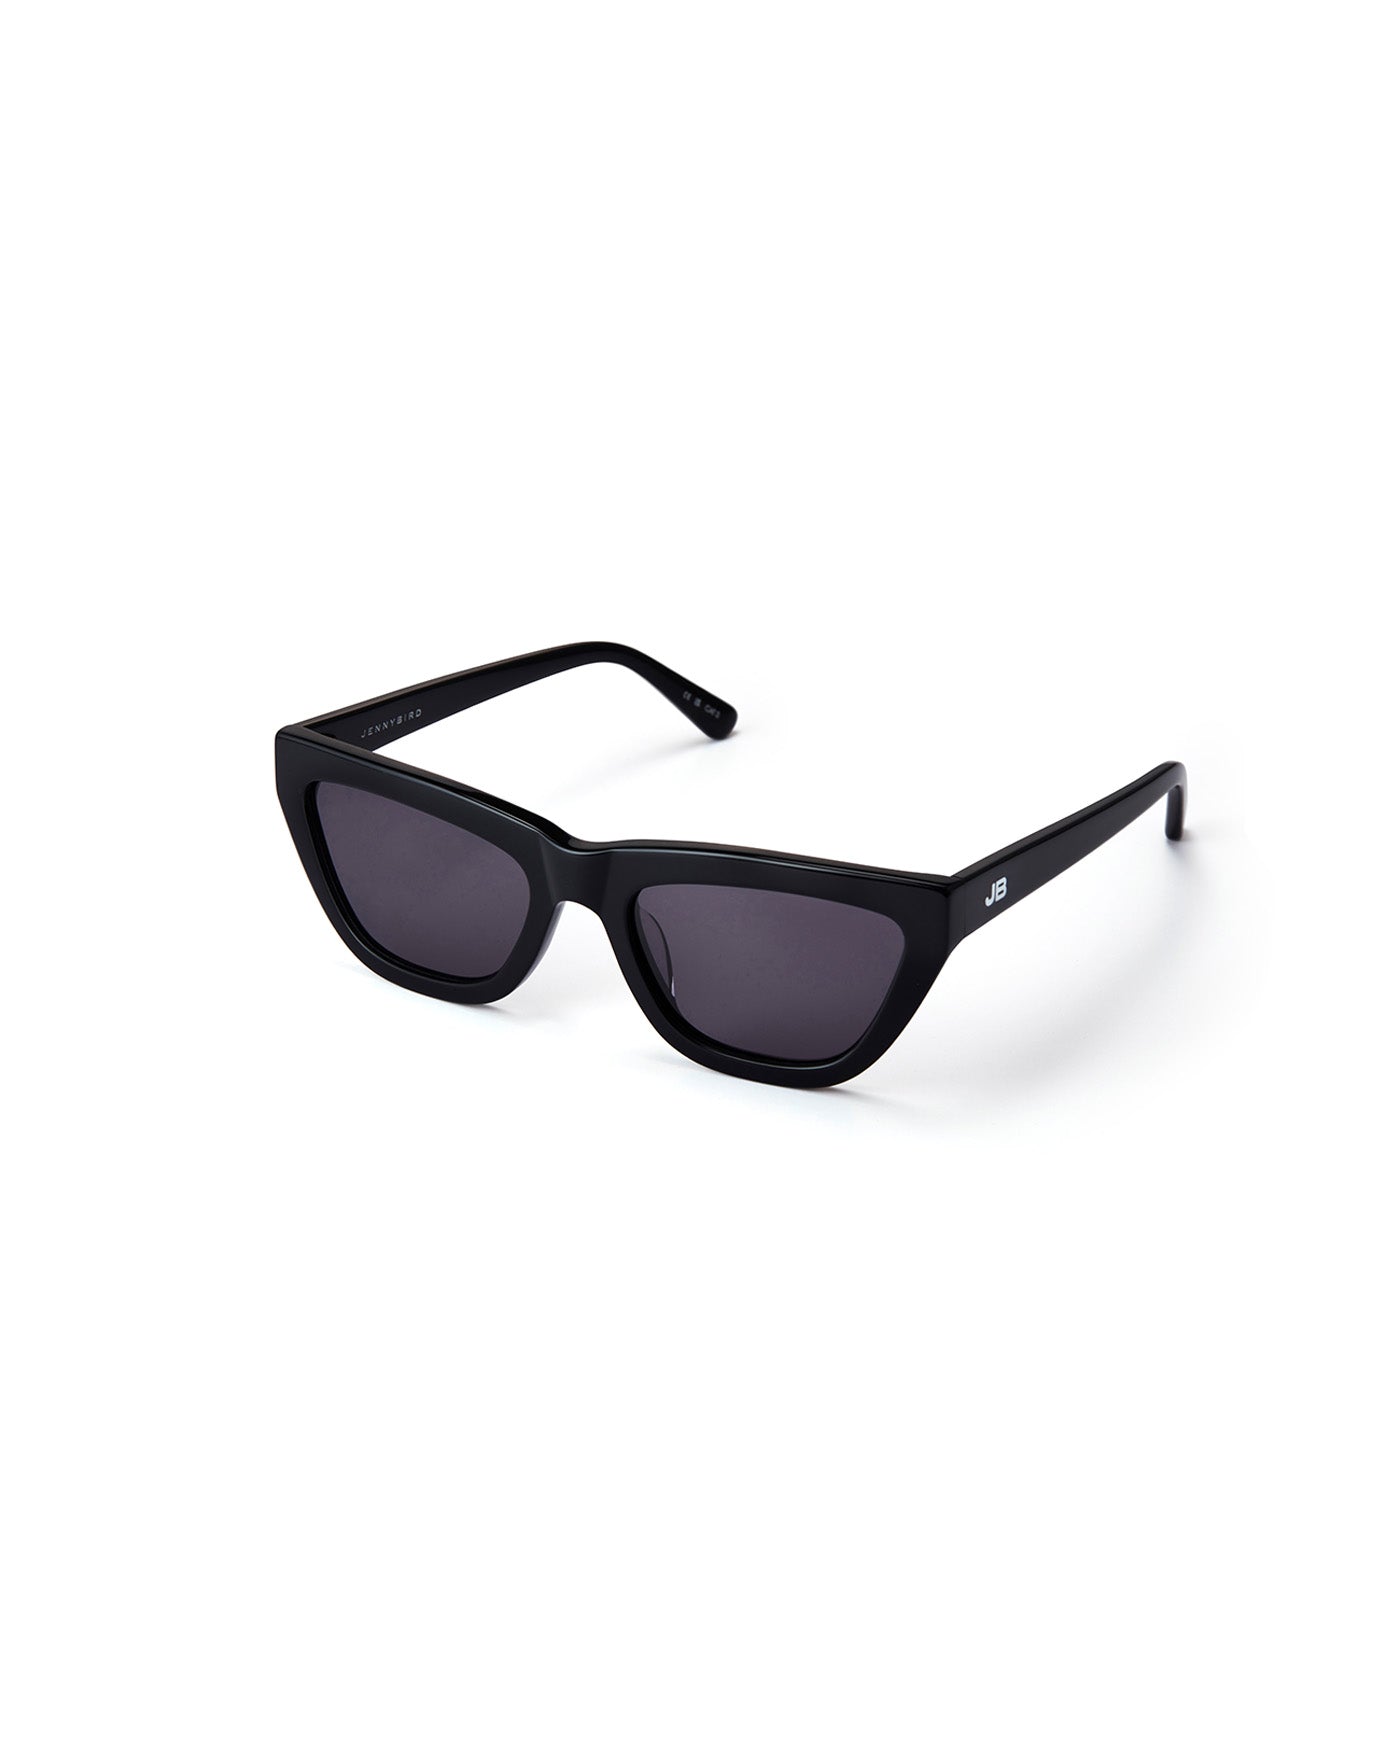 Solar Altamont Noir Cat 4 Polarized Sunglasses : Snowleader